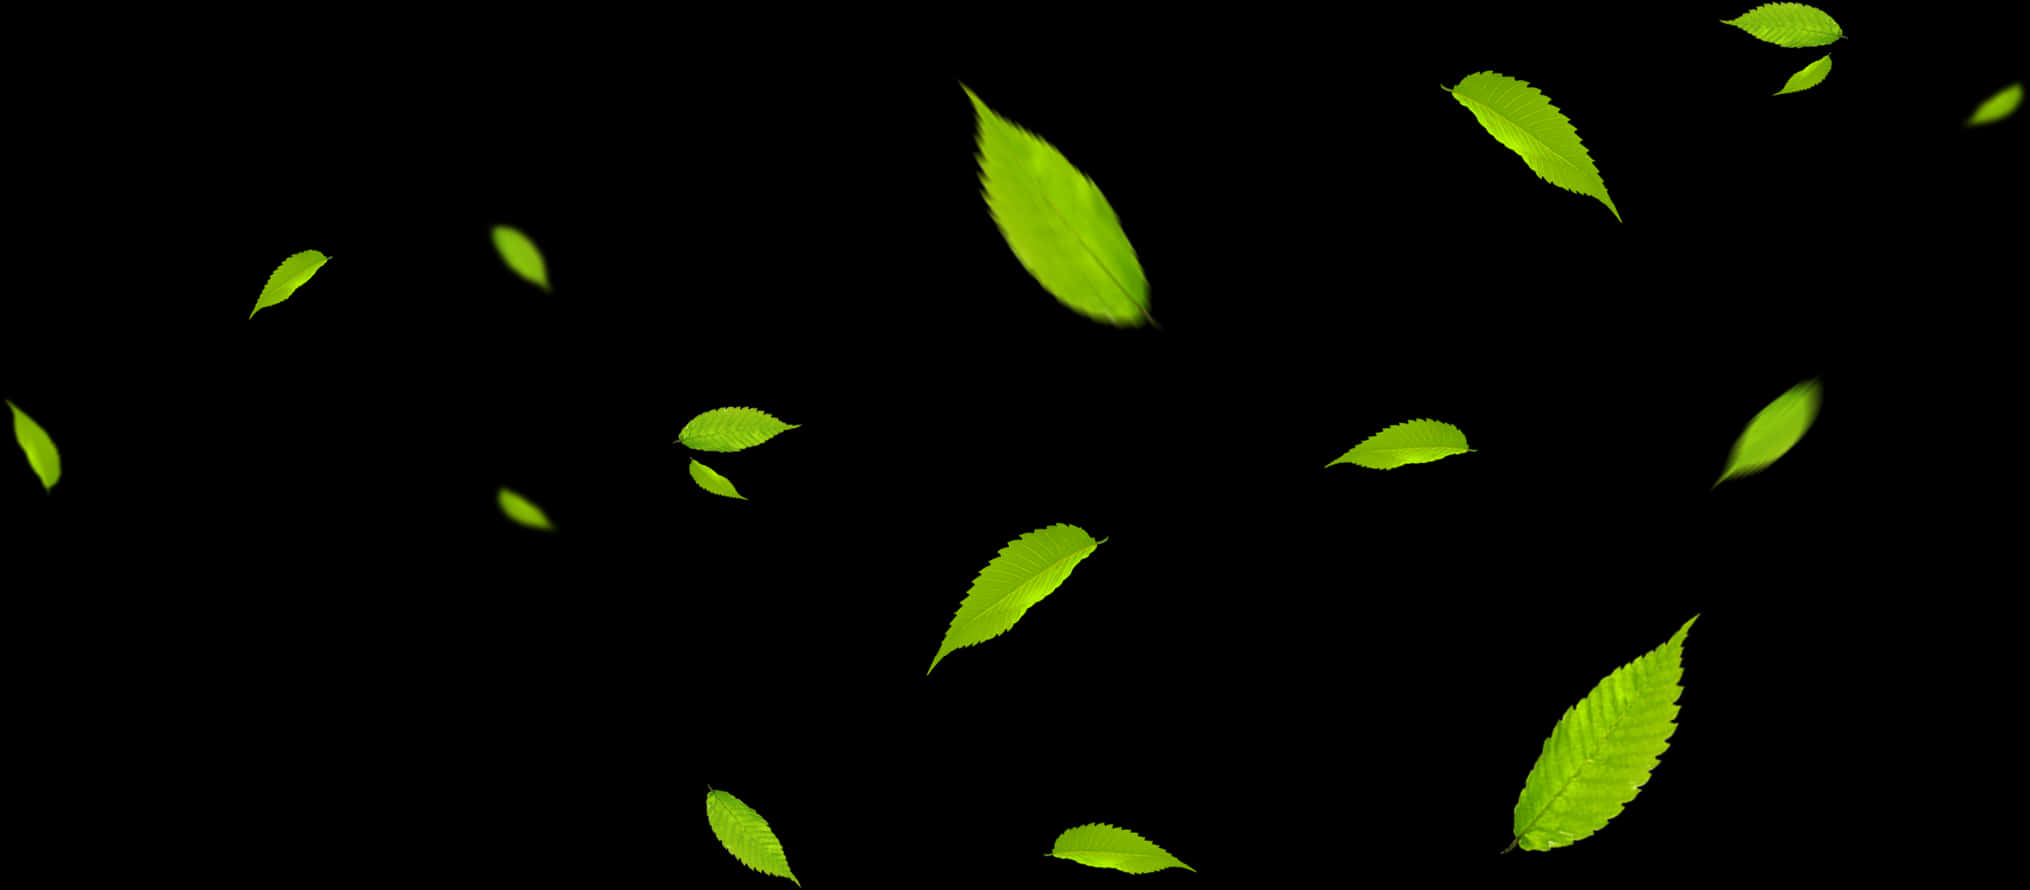 Vibrant Green Leaveson Black Background.jpg PNG